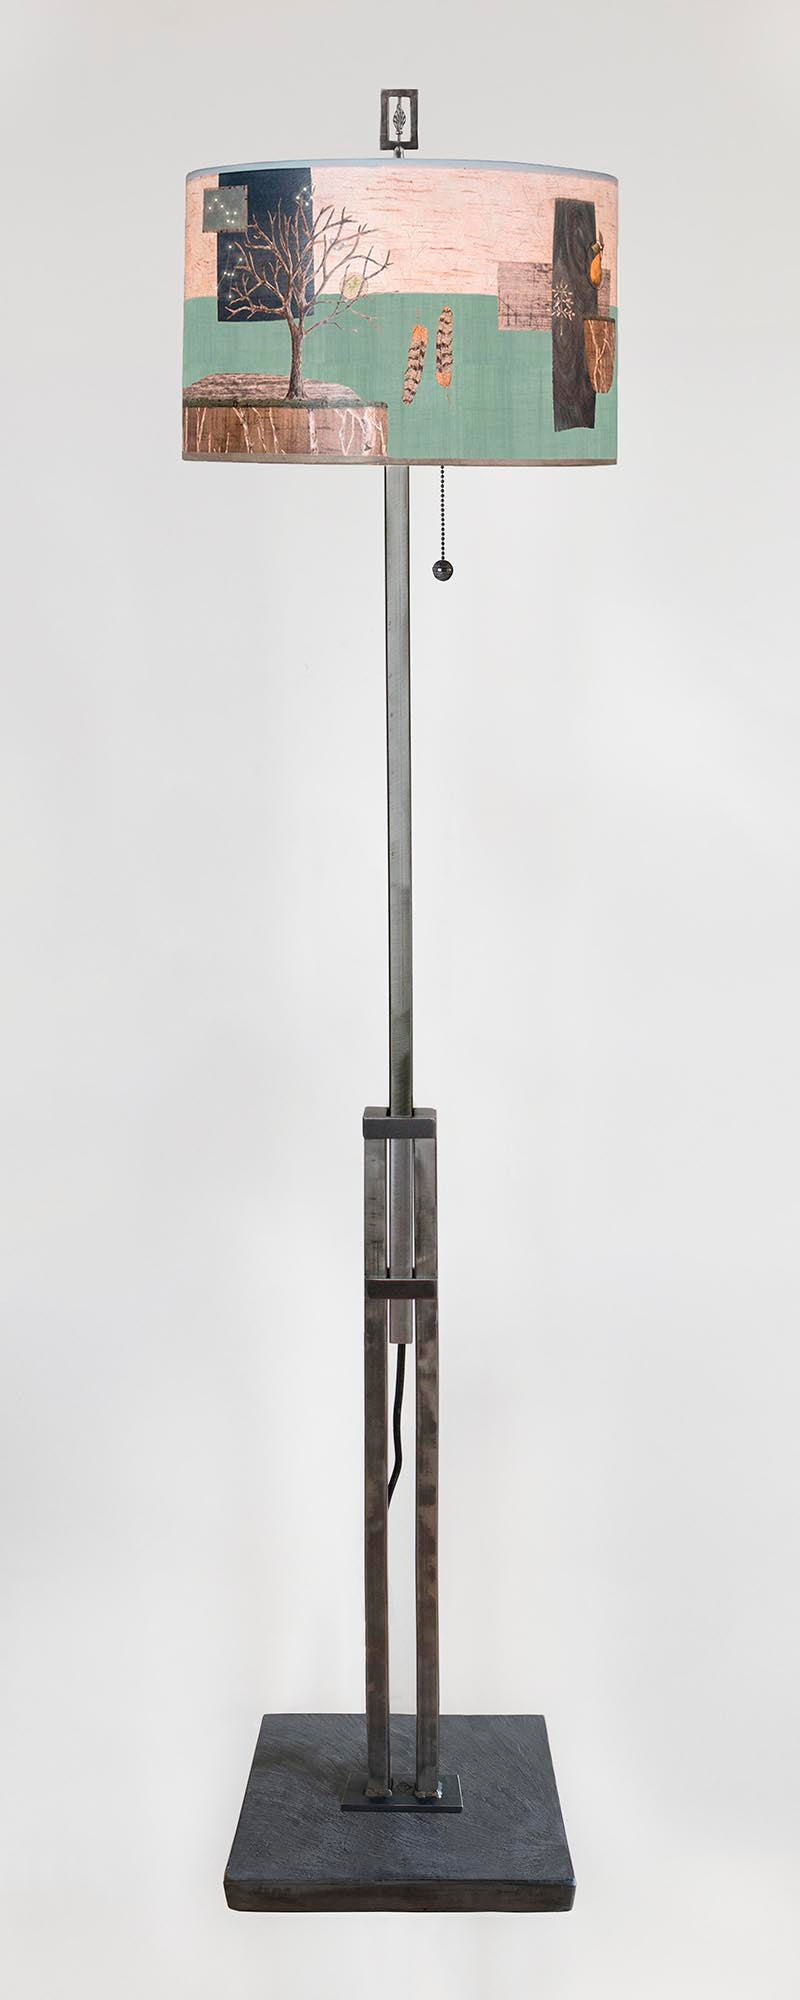 Adjustable-Height Steel Floor Lamp with Large Drum Shade in Wander in Field